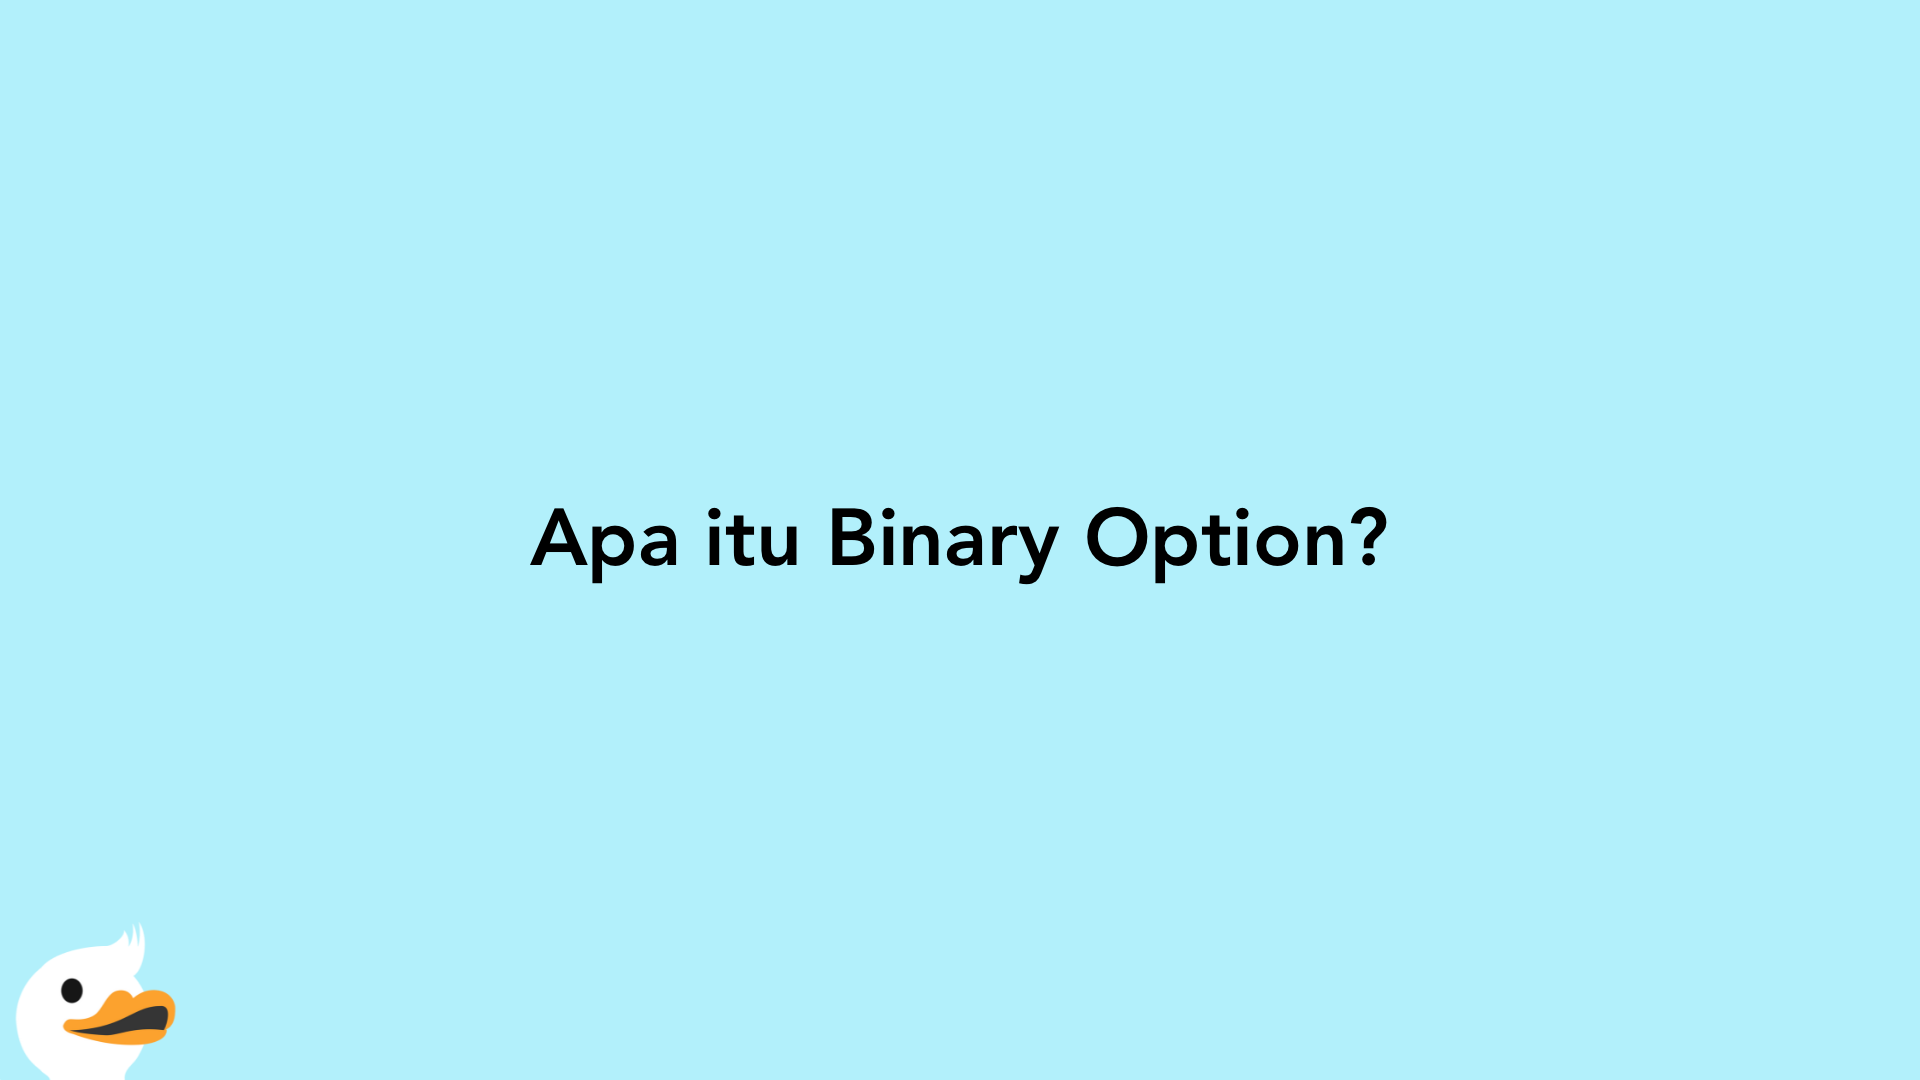 Apa itu Binary Option?